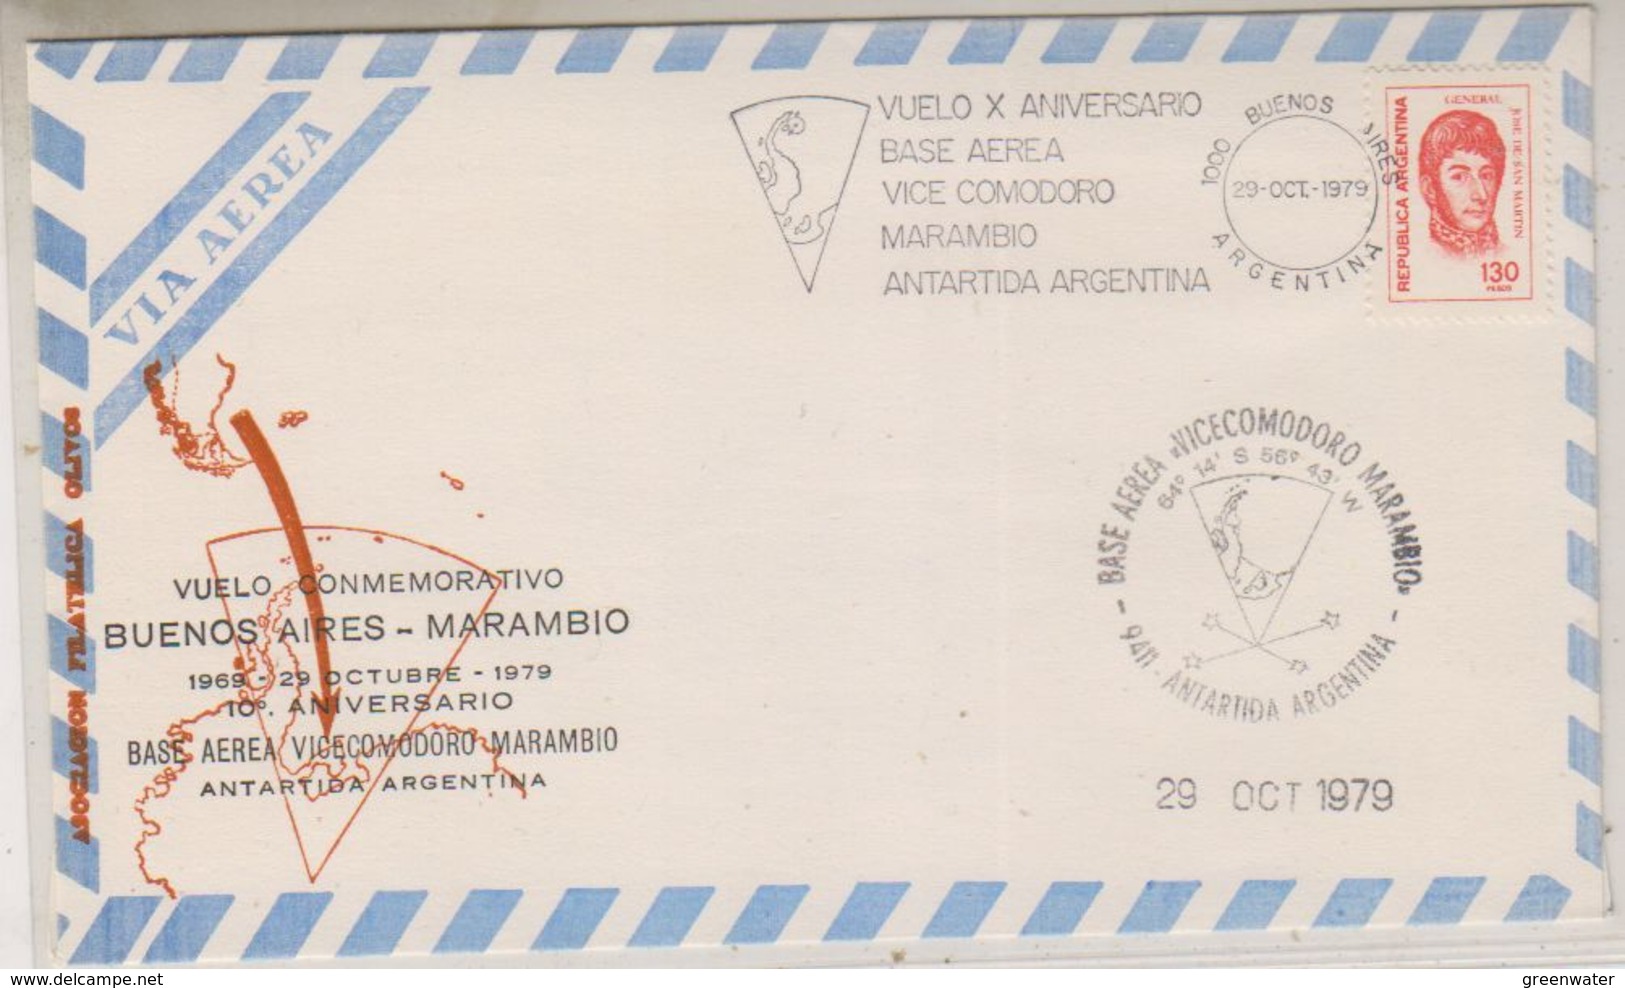 Argentina 1979 Vuelo Commemorativo Buenos Aires - Base Marambio 29 Oct 1979 Cover (38499) - Polar Flights